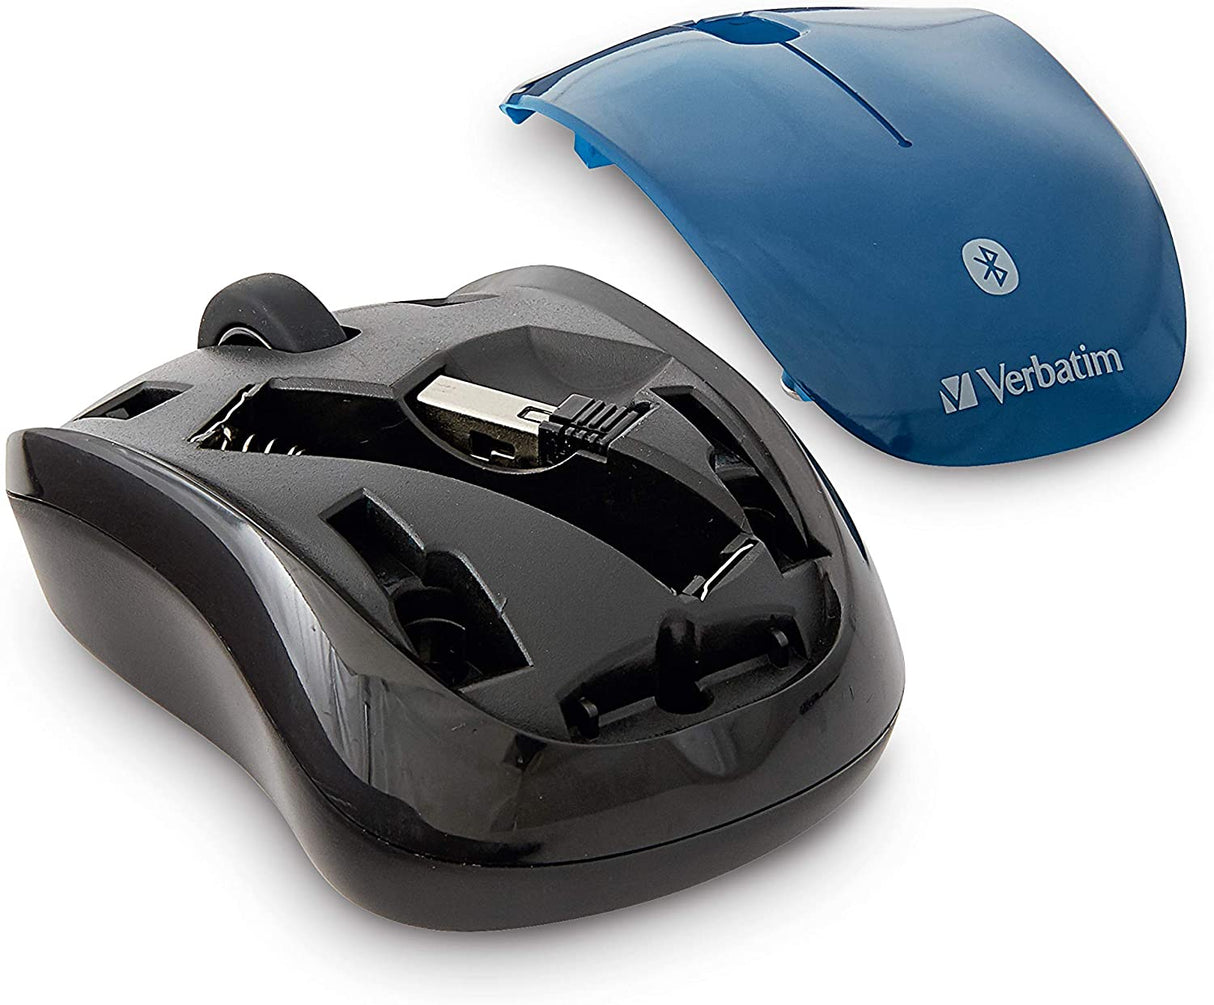 Verbatim Bluetooth Wireless Tablet Multi-Trac Blue LED Mouse - Dark Teal